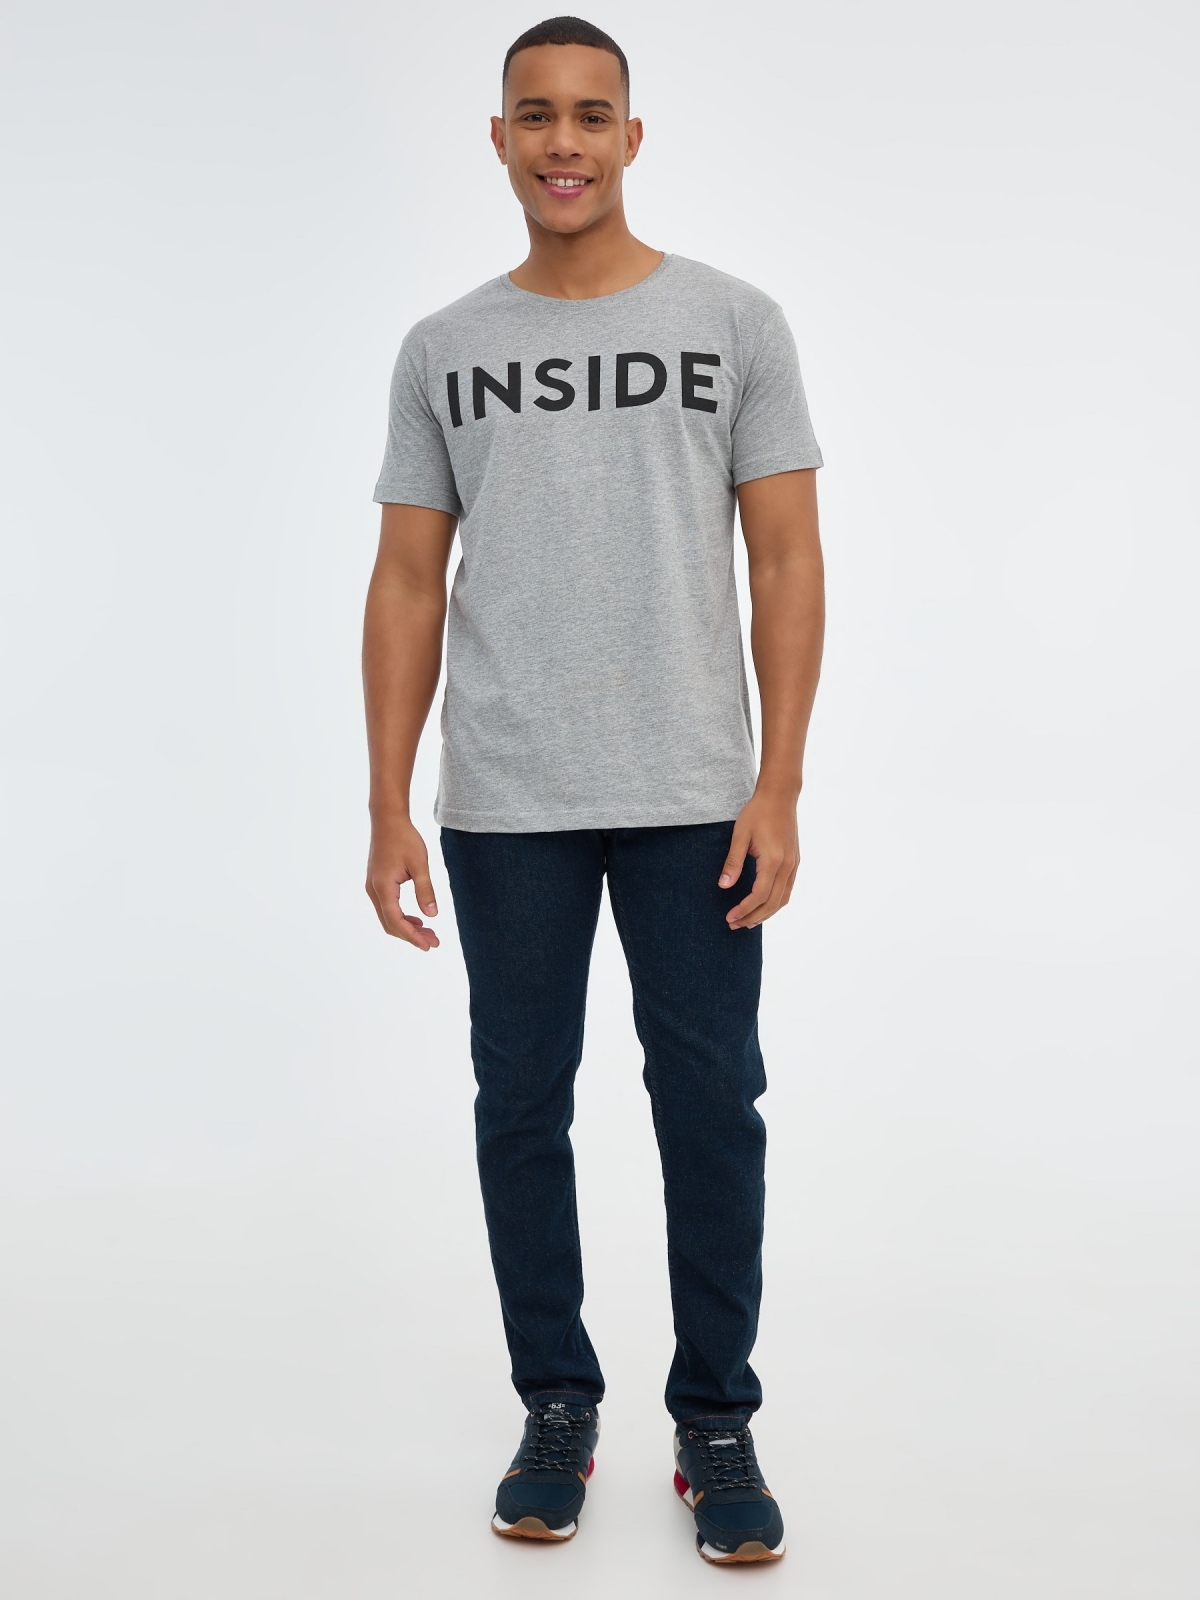 Camiseta básica "INSIDE" melange medio vista general frontal